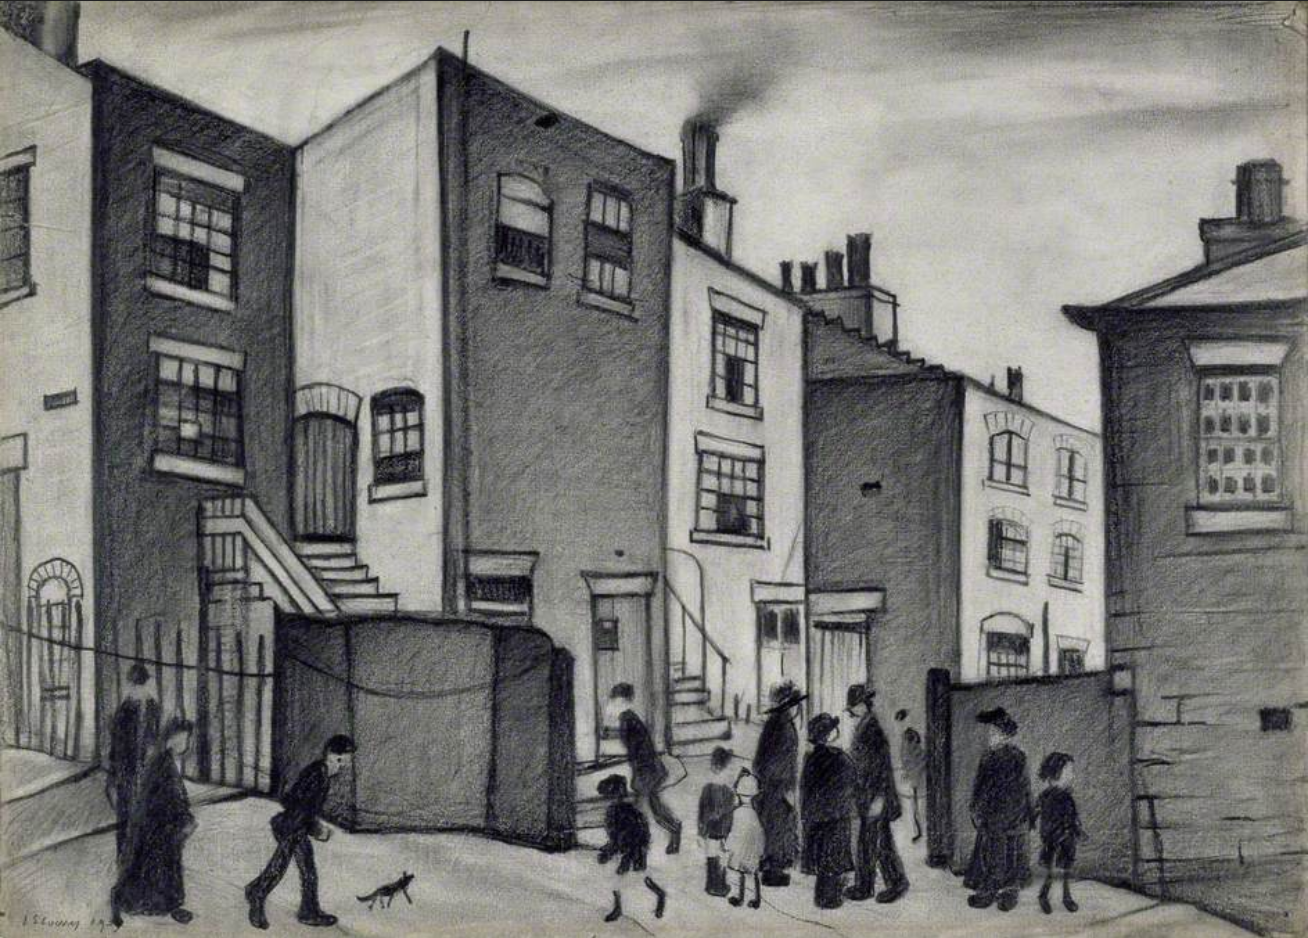 Street Scene (1939) by Laurence Stephen Lowry (1887 - 1976), English artist.